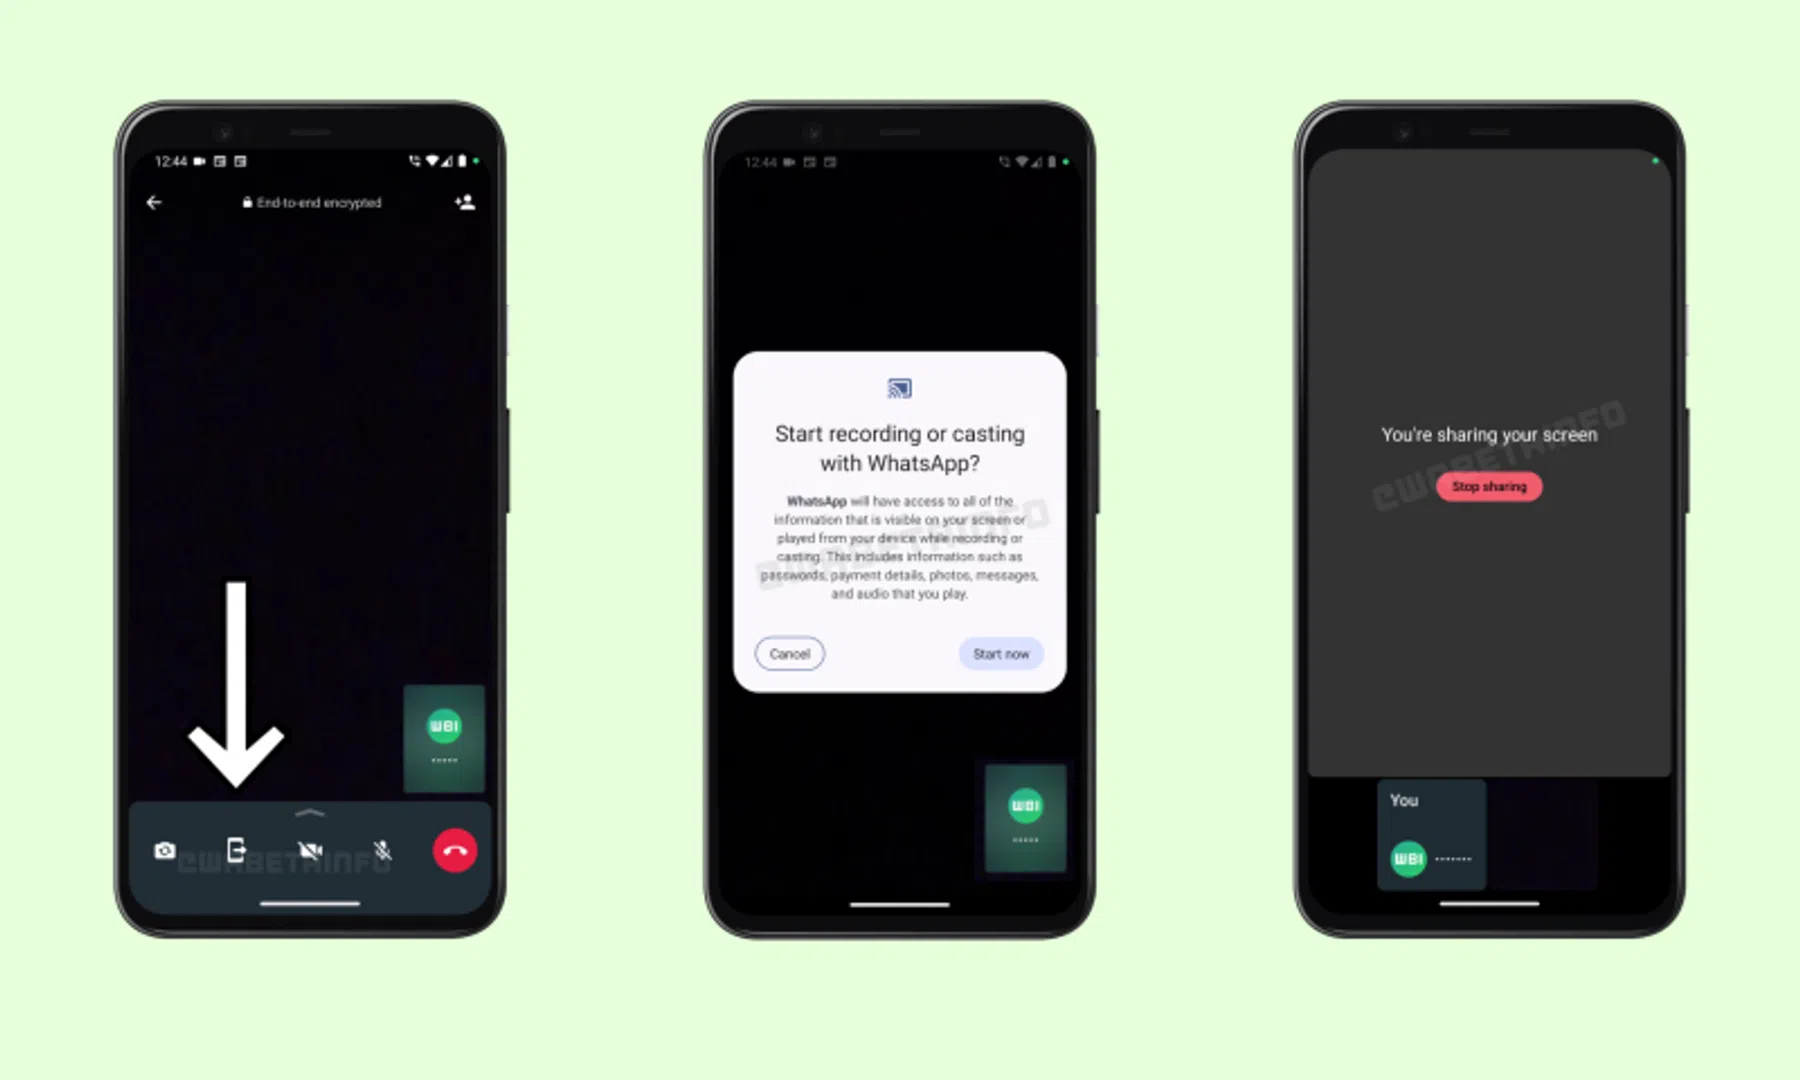 whatsapp scherm delen android app videobellen iphone